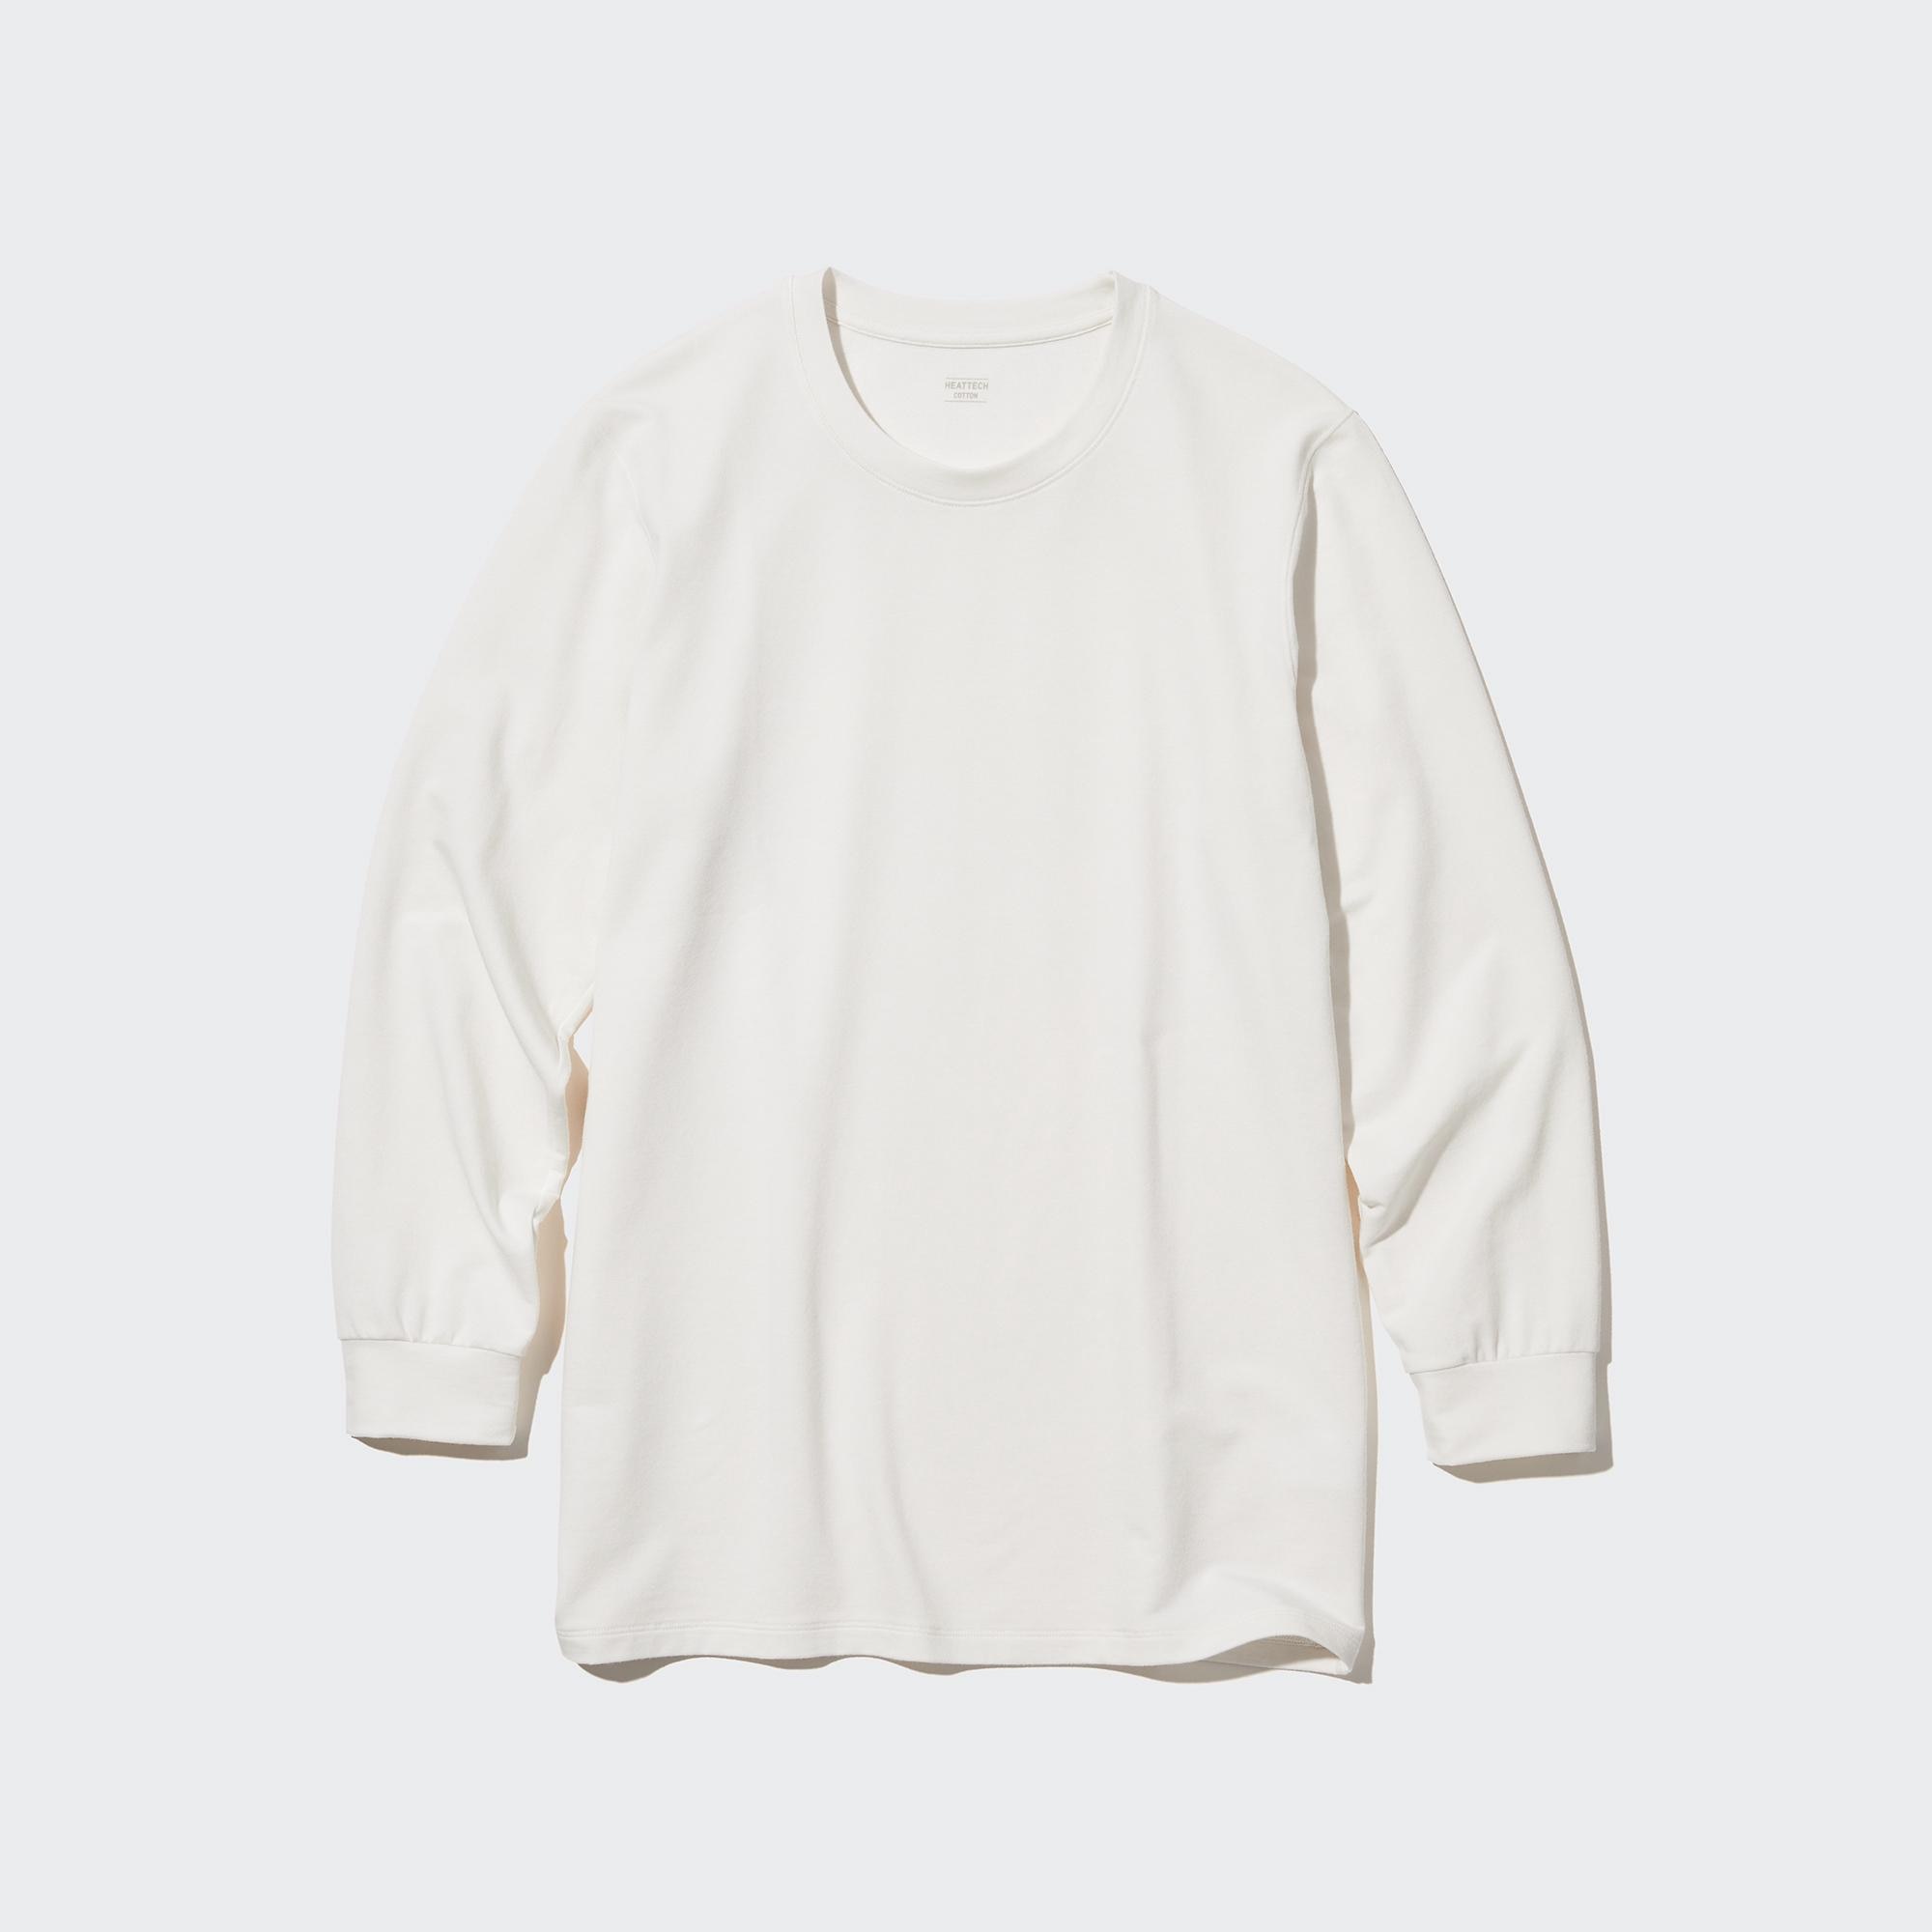 Plain Short Sleeve Comfort Soft Cotton Tee Undershirts TOP LEGGING Mens V-Neck T-Shirts 